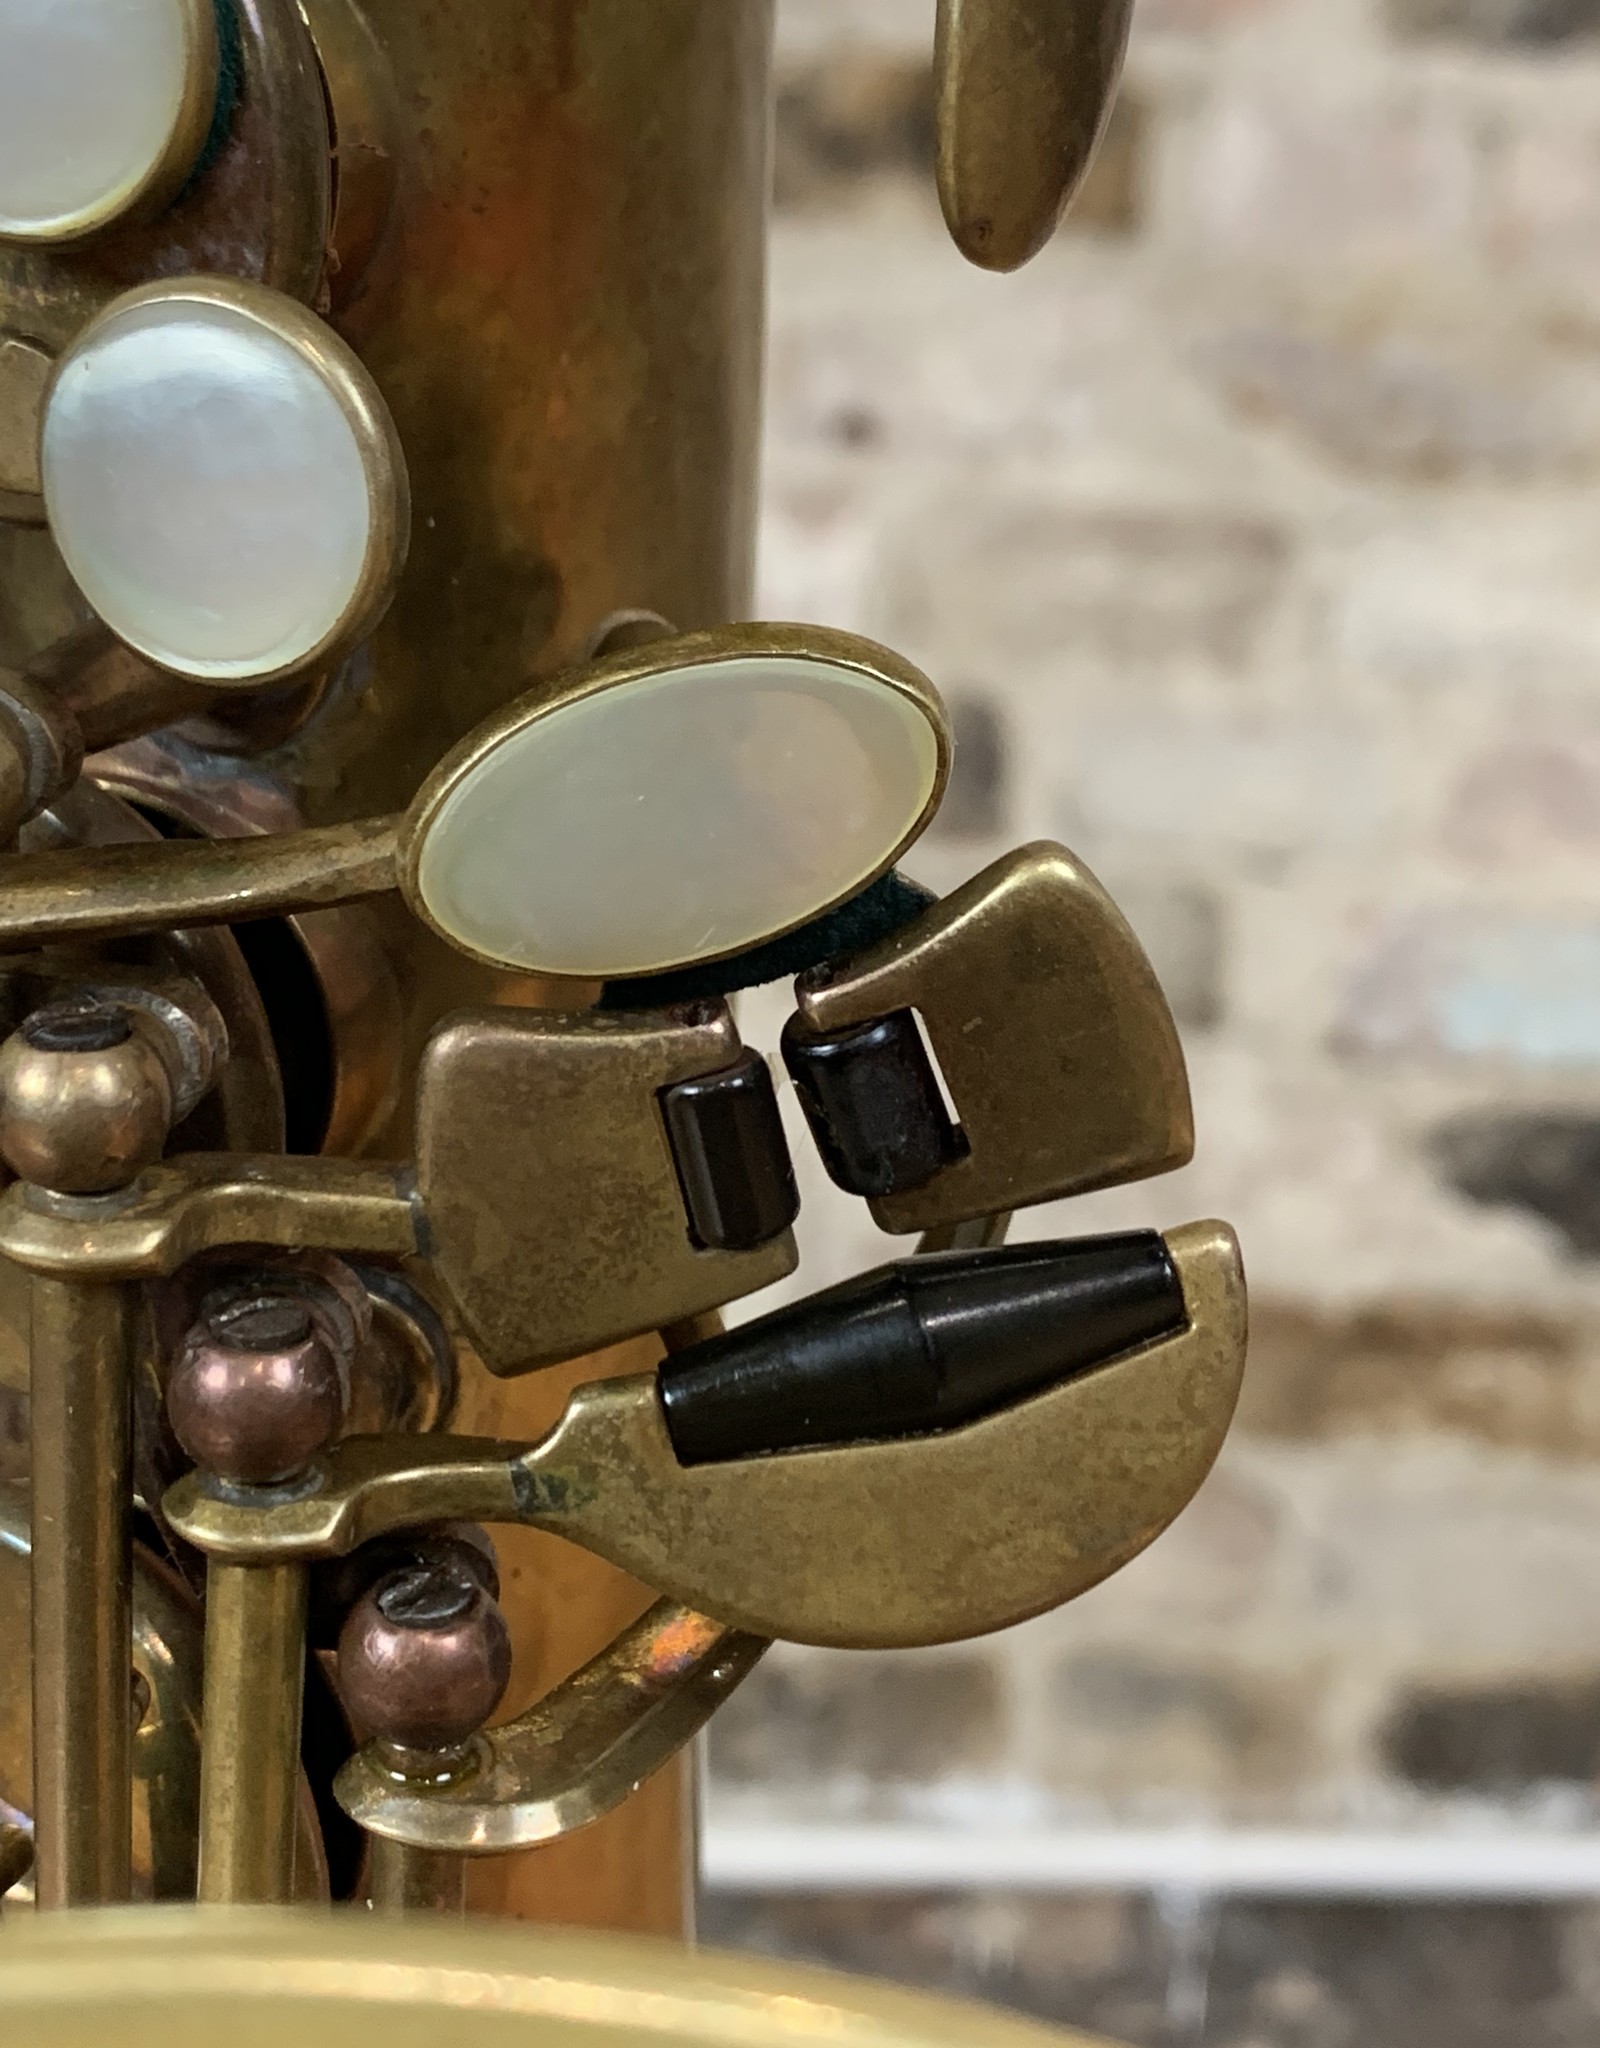 Selmer Selmer SBA Super Balanced Action Tenor Saxophone Unlacquered Full Overhaul